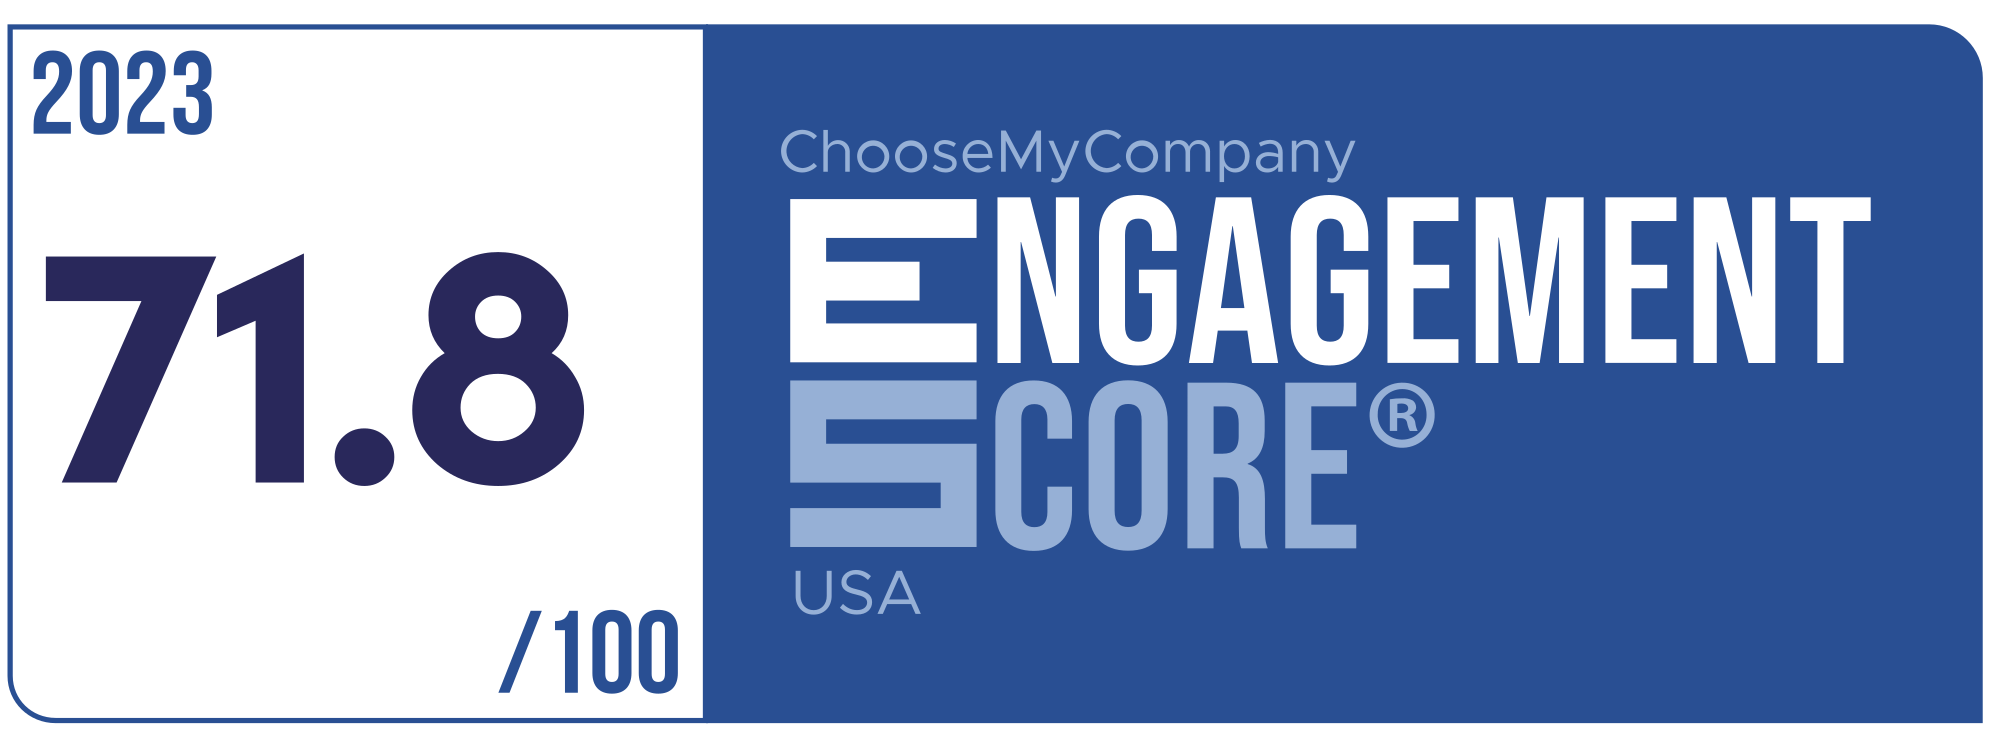 Label Engagement Score 2023 USA